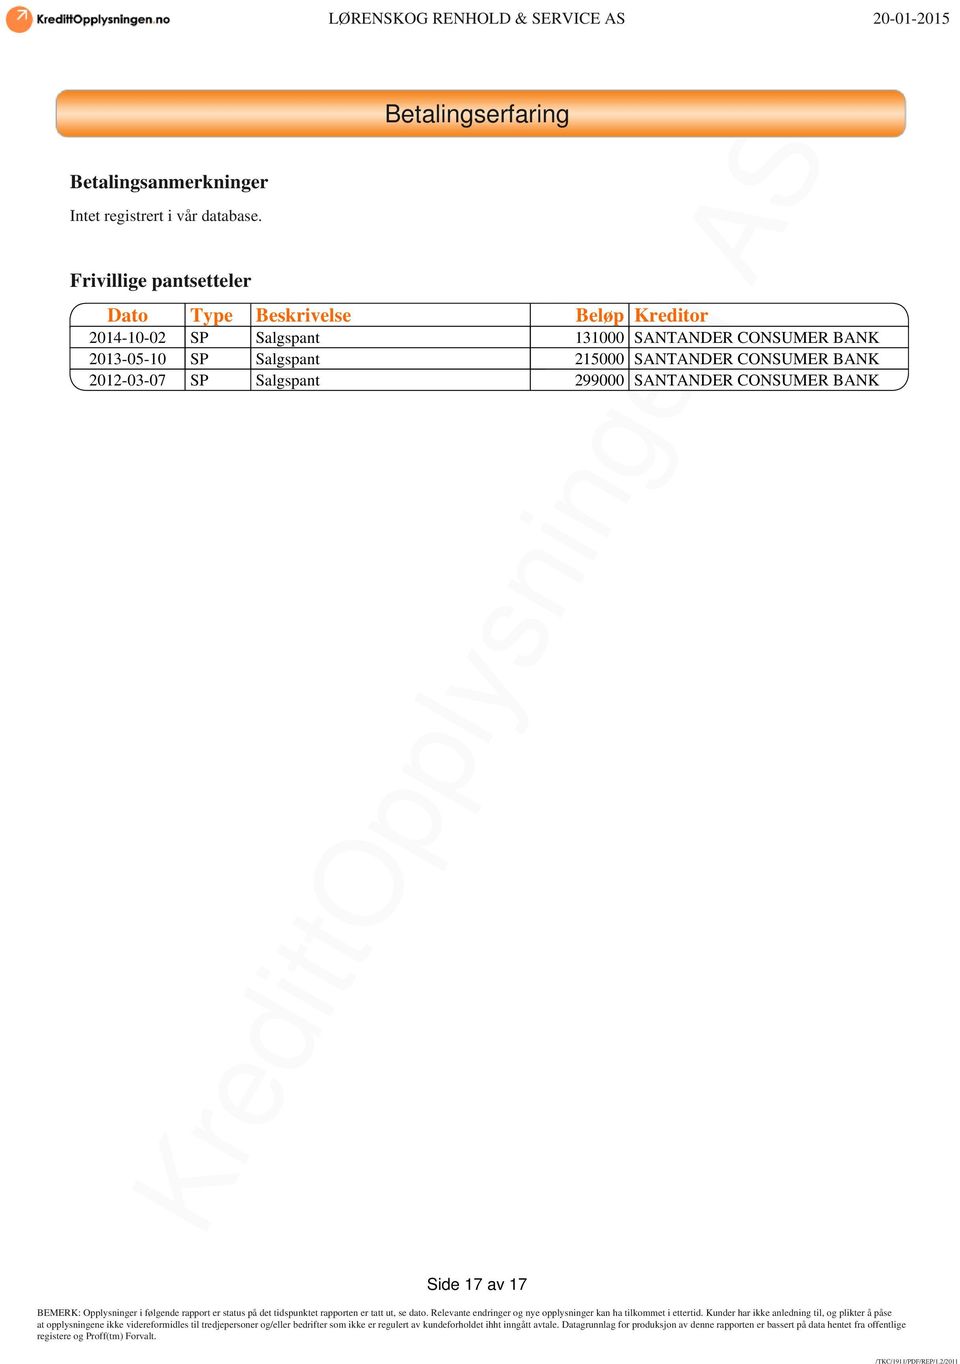 Kreditor 2014-10-02 SP Salgspant 131000 SANTANDER CONSUMER BANK 2013-05-10 SP